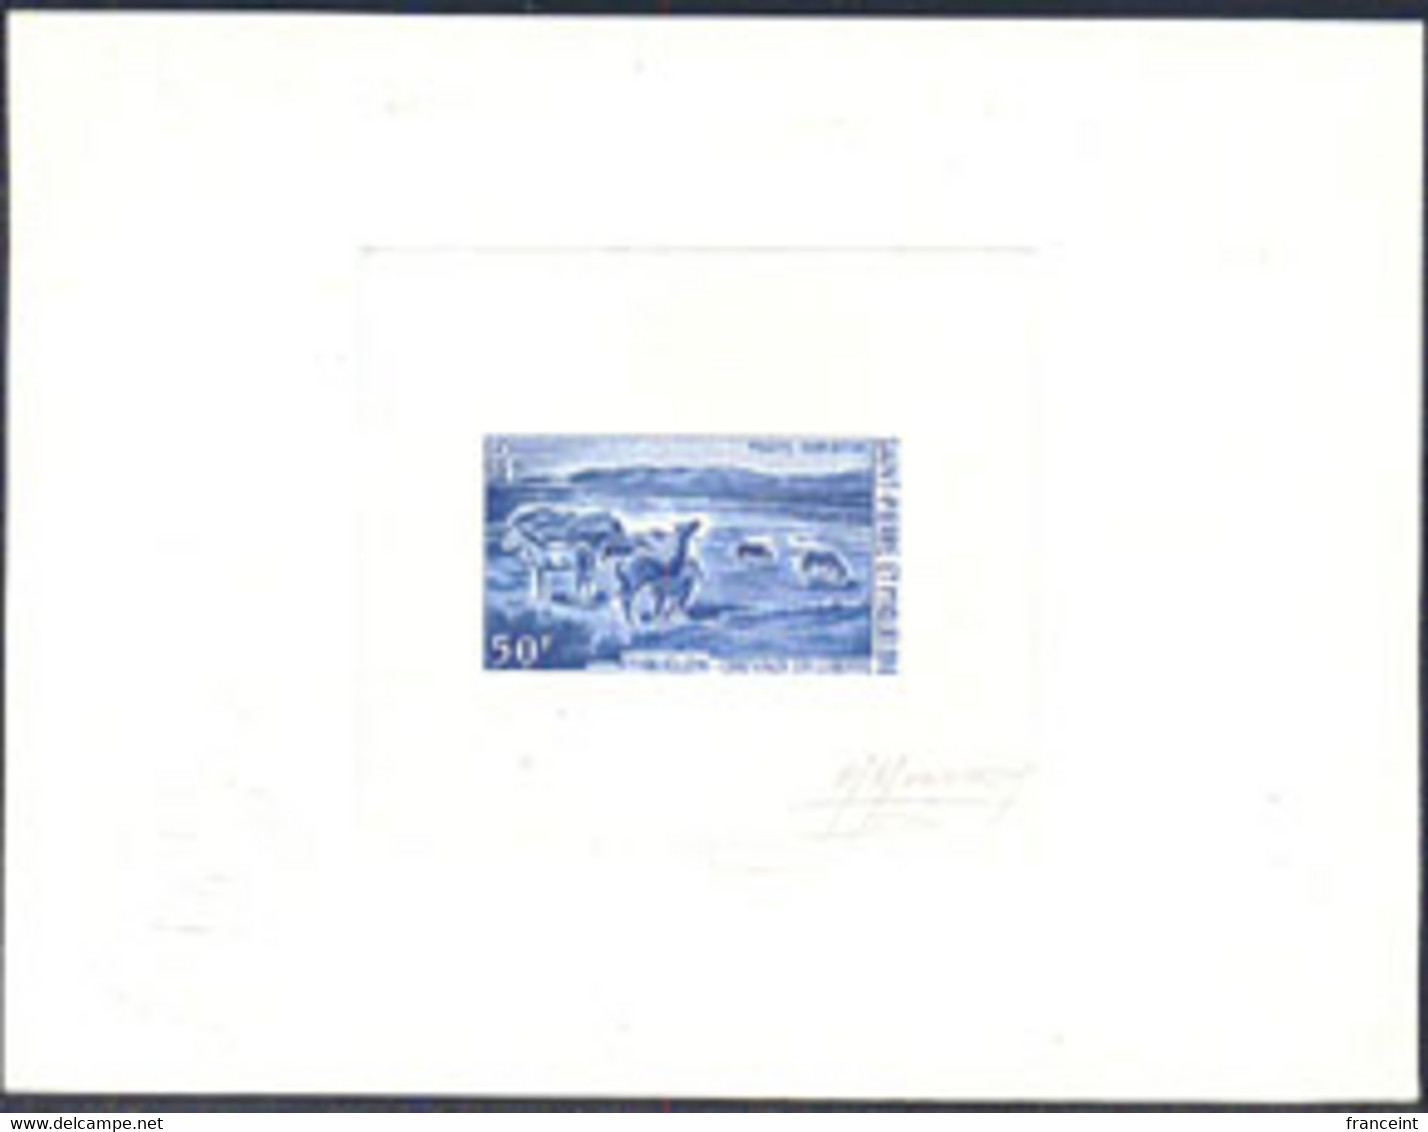 ST. PIERRE & MIQUELON (1969) Horses Grazing. Die Proof In Blue Signed By The Engraver MONVOISIN. Scott No C41 - Sin Dentar, Pruebas De Impresión Y Variedades